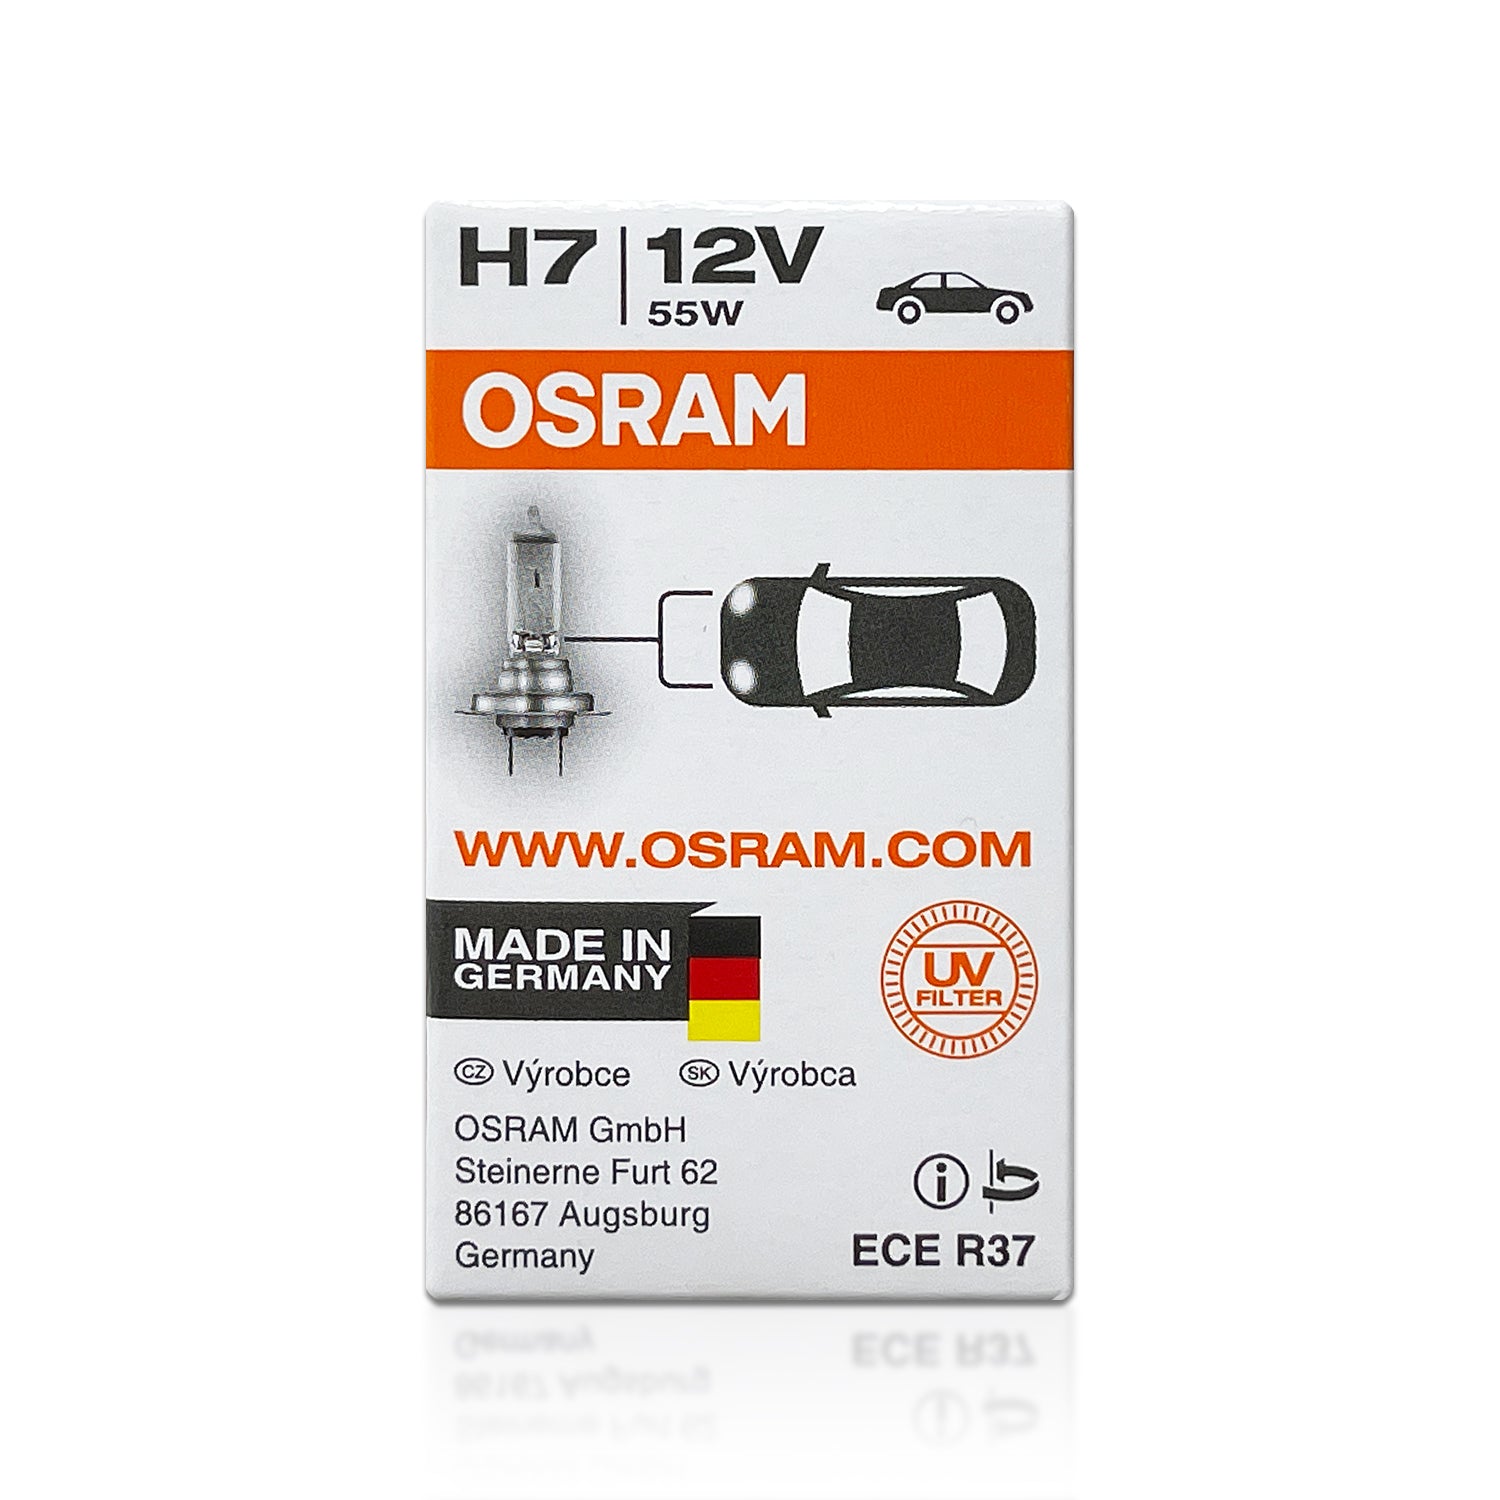 OSRAM 64210 H7 499 12V Original Line Halogen Bulbs Car Bulb Headlamp light  Bulbs Bulb Car lamp Headlight Headlamp Duo